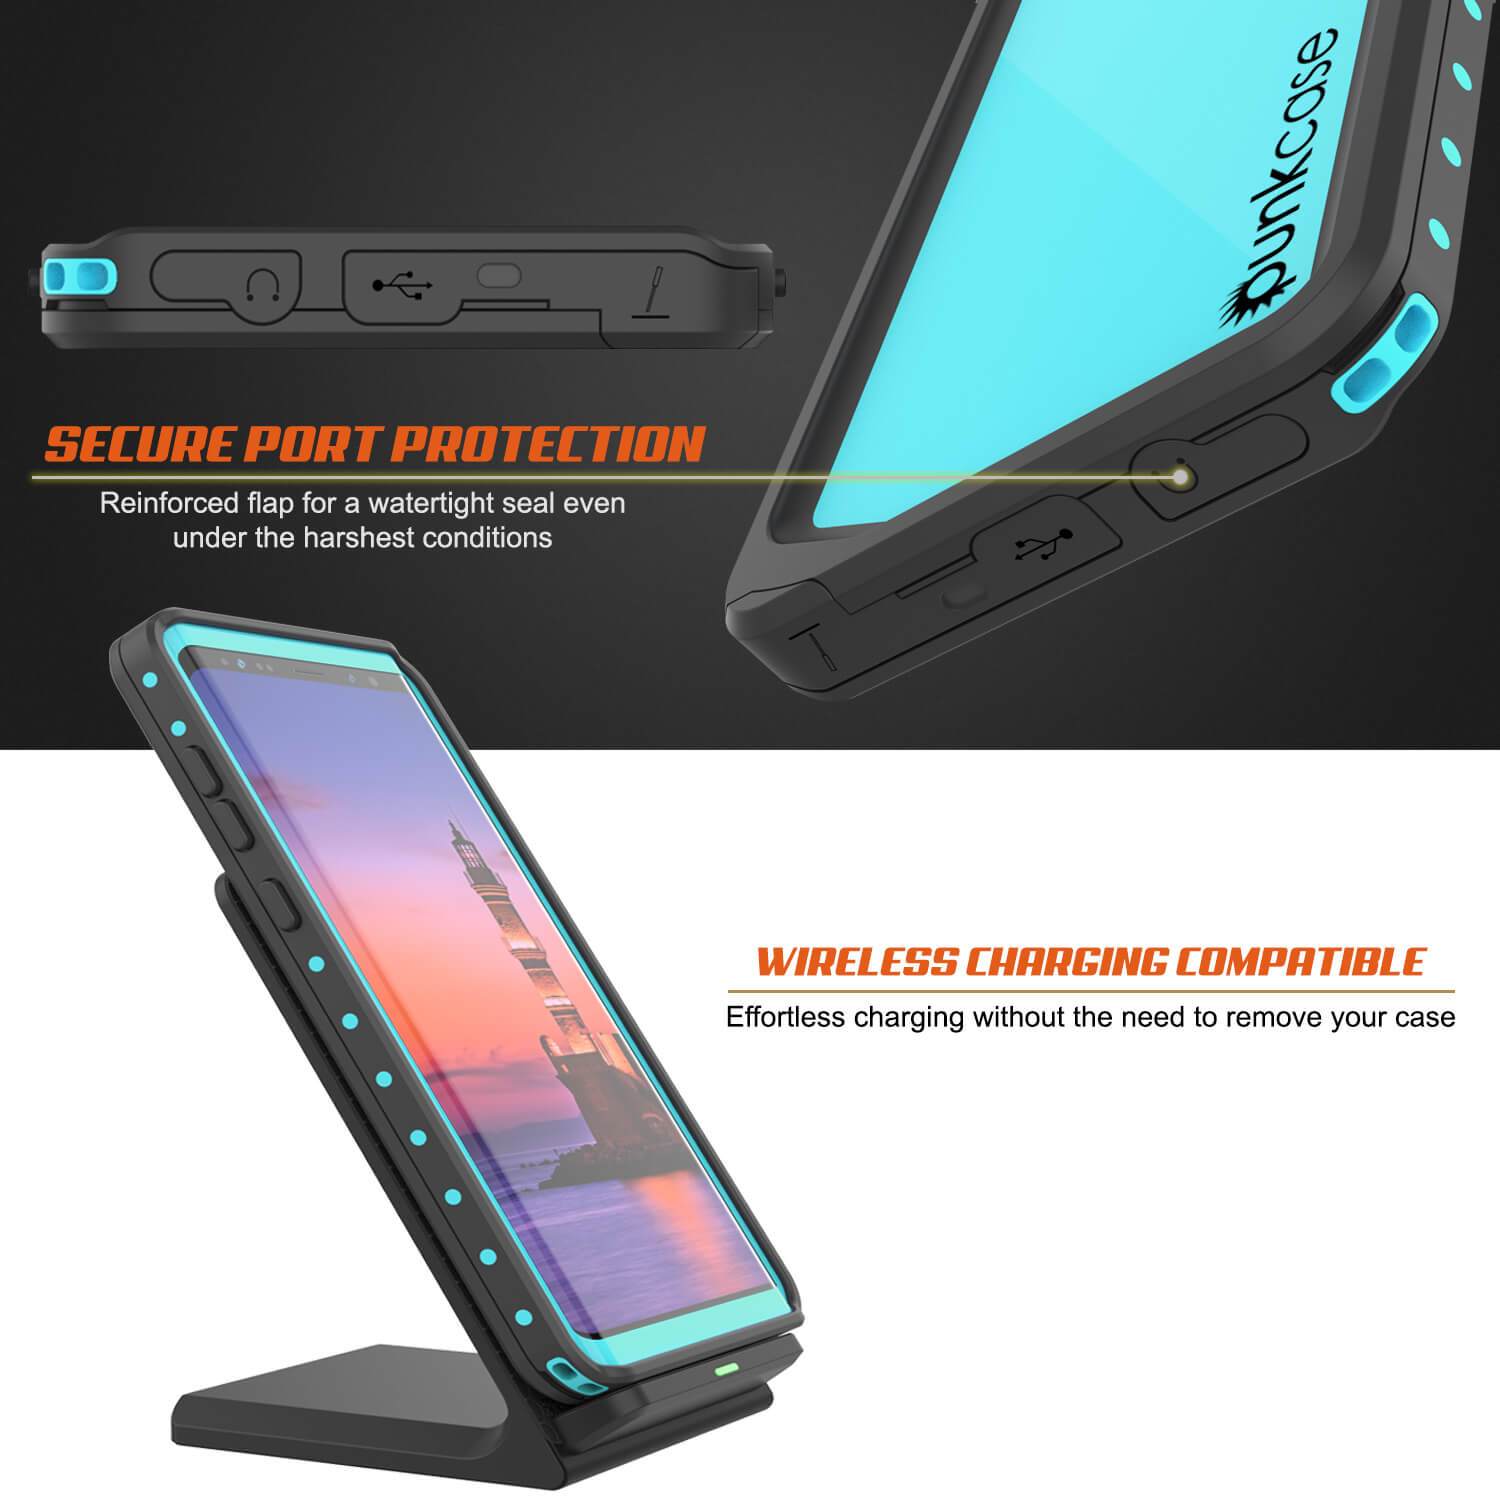 Galaxy Note 9 Waterproof Case PunkCase StudStar Teal